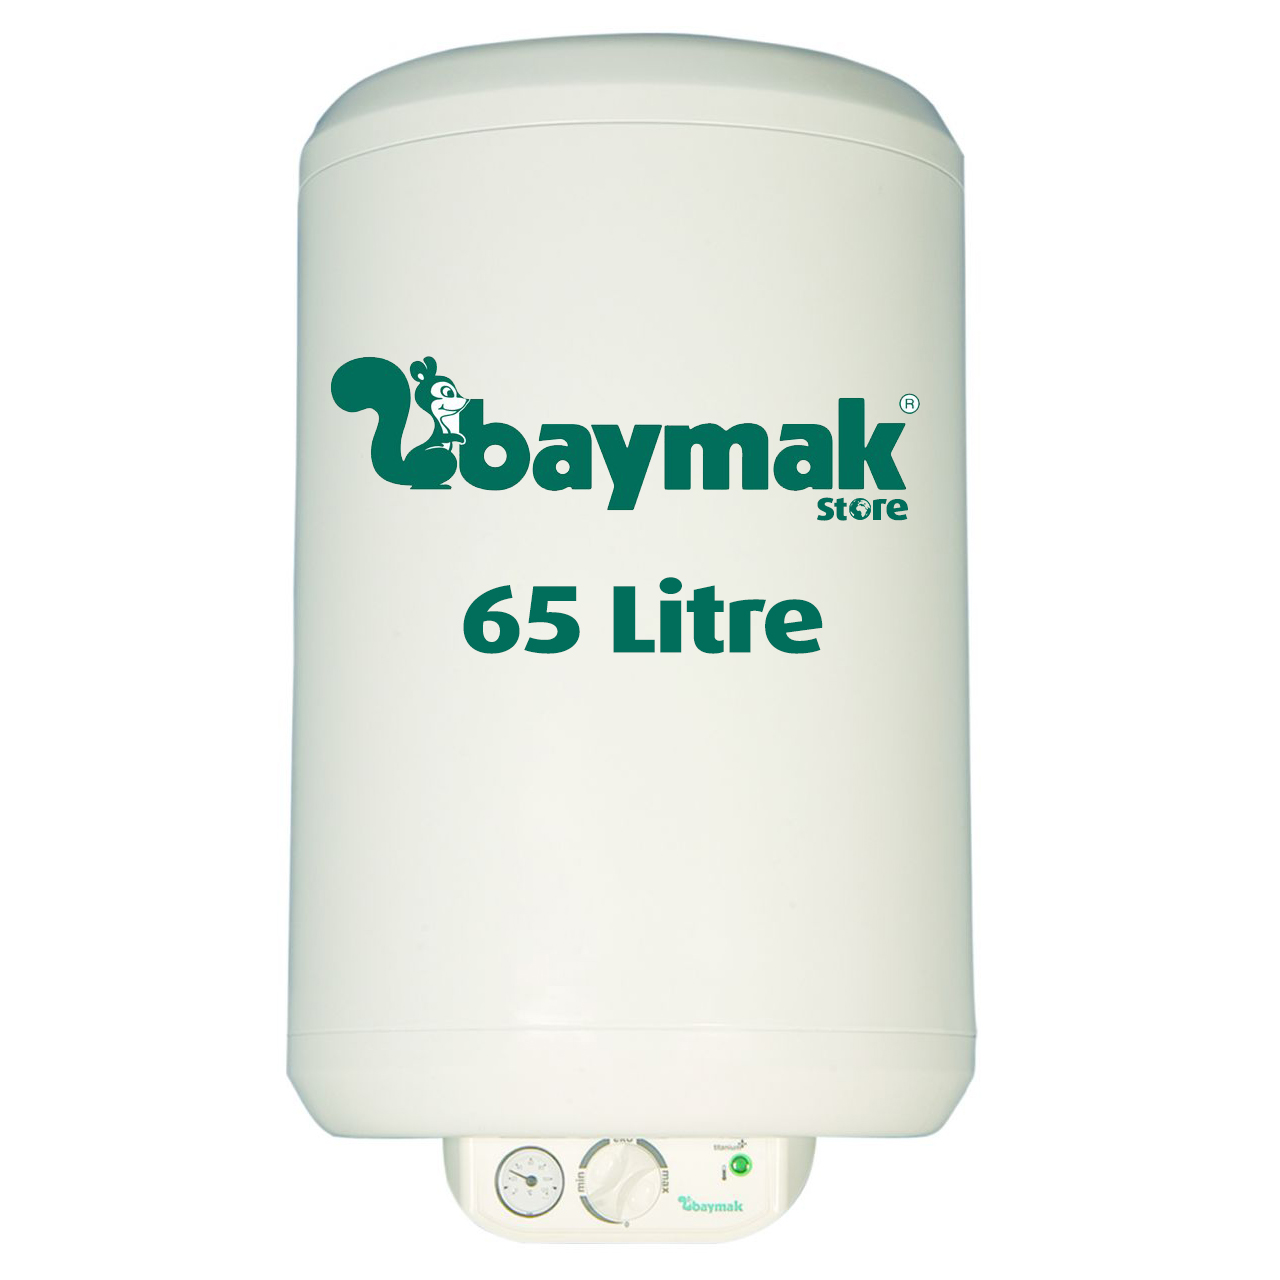 Baymak Aqua Konfor 65 litre Termosifon Montaj Dahil